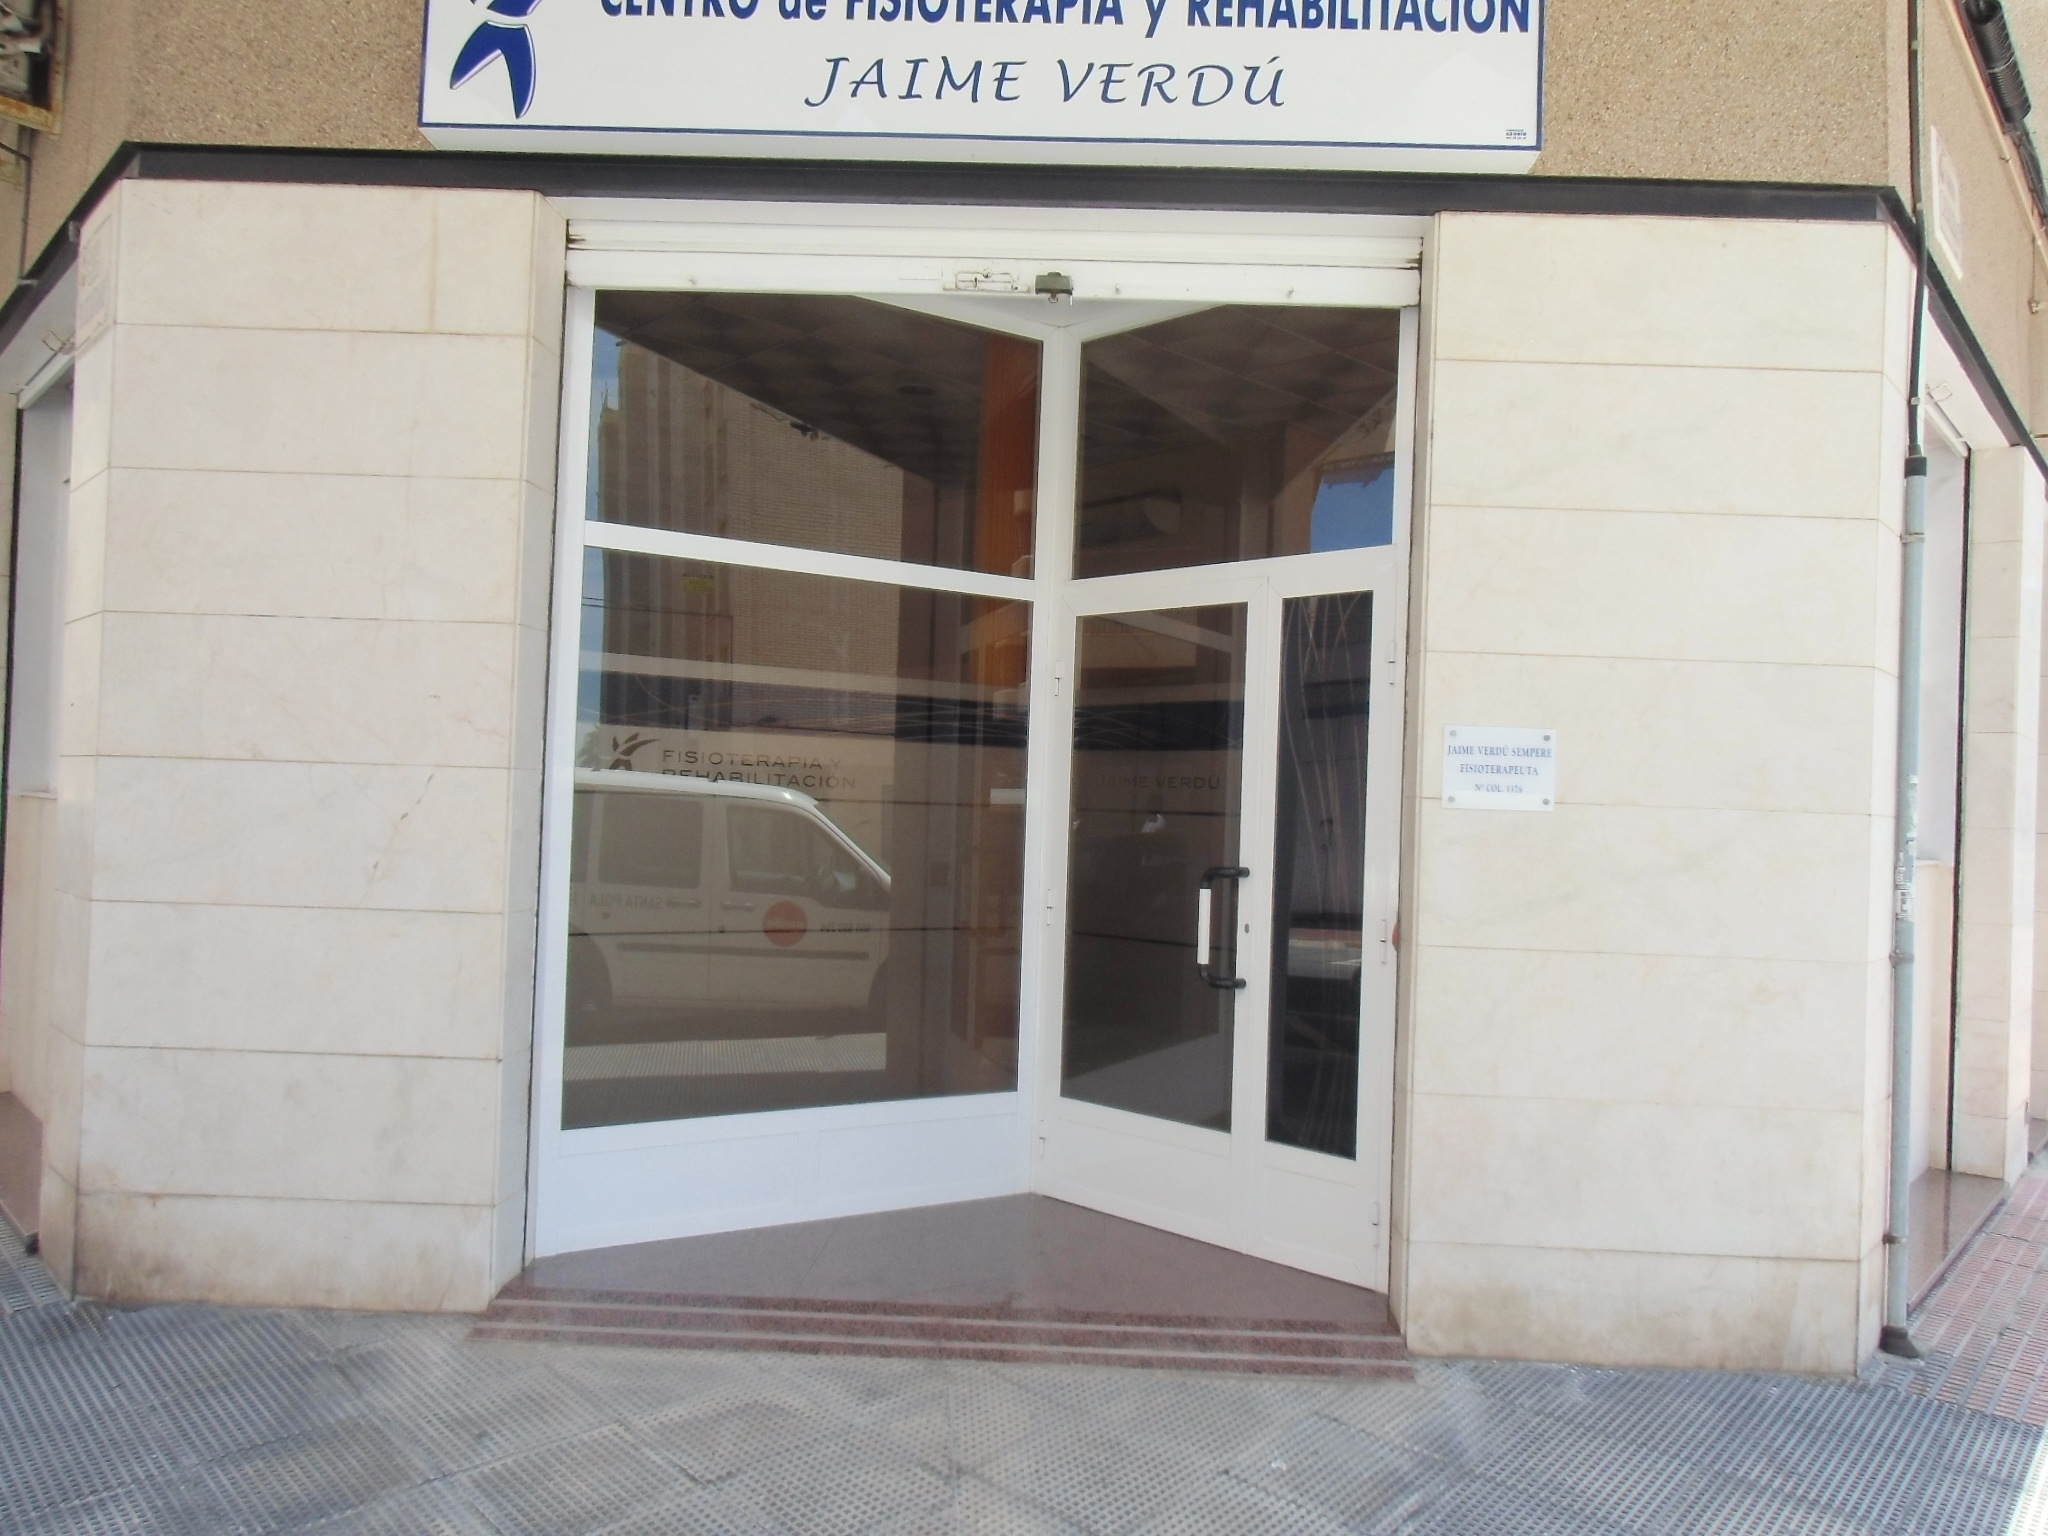 CENTRO DE FISIOTERAPIA  JAIME VERDU